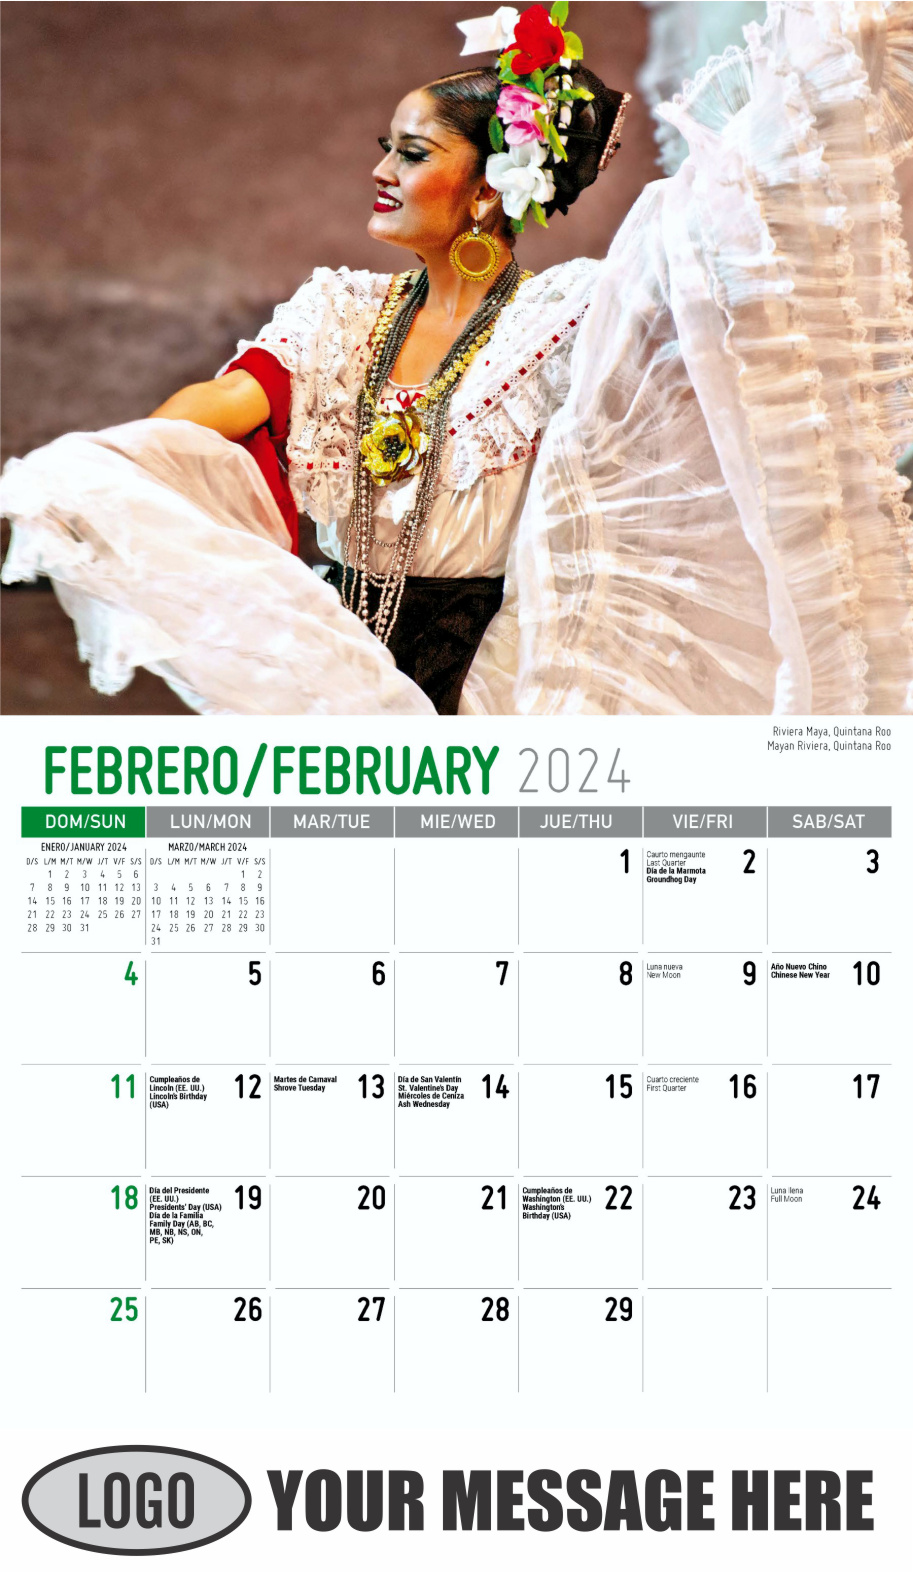 Scenes of Mexico 2024 Bilingual Business Promo Calendar - February